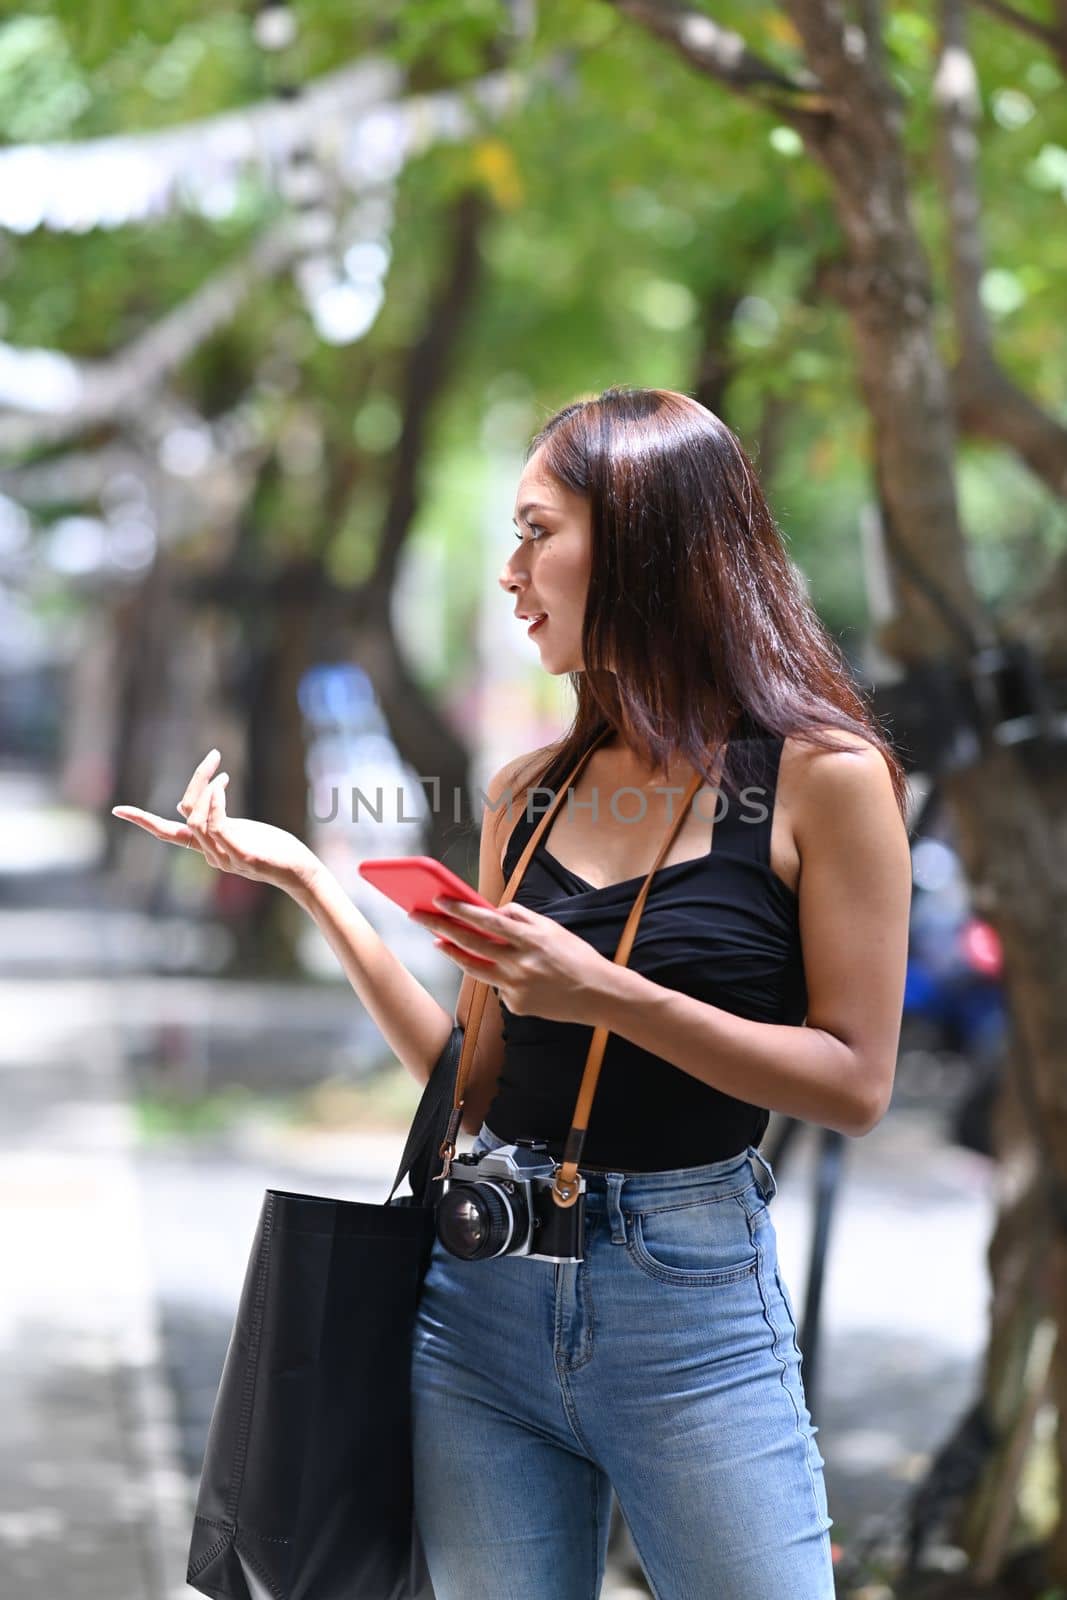 Female traveler holding smart phone and walking in the city street. by prathanchorruangsak